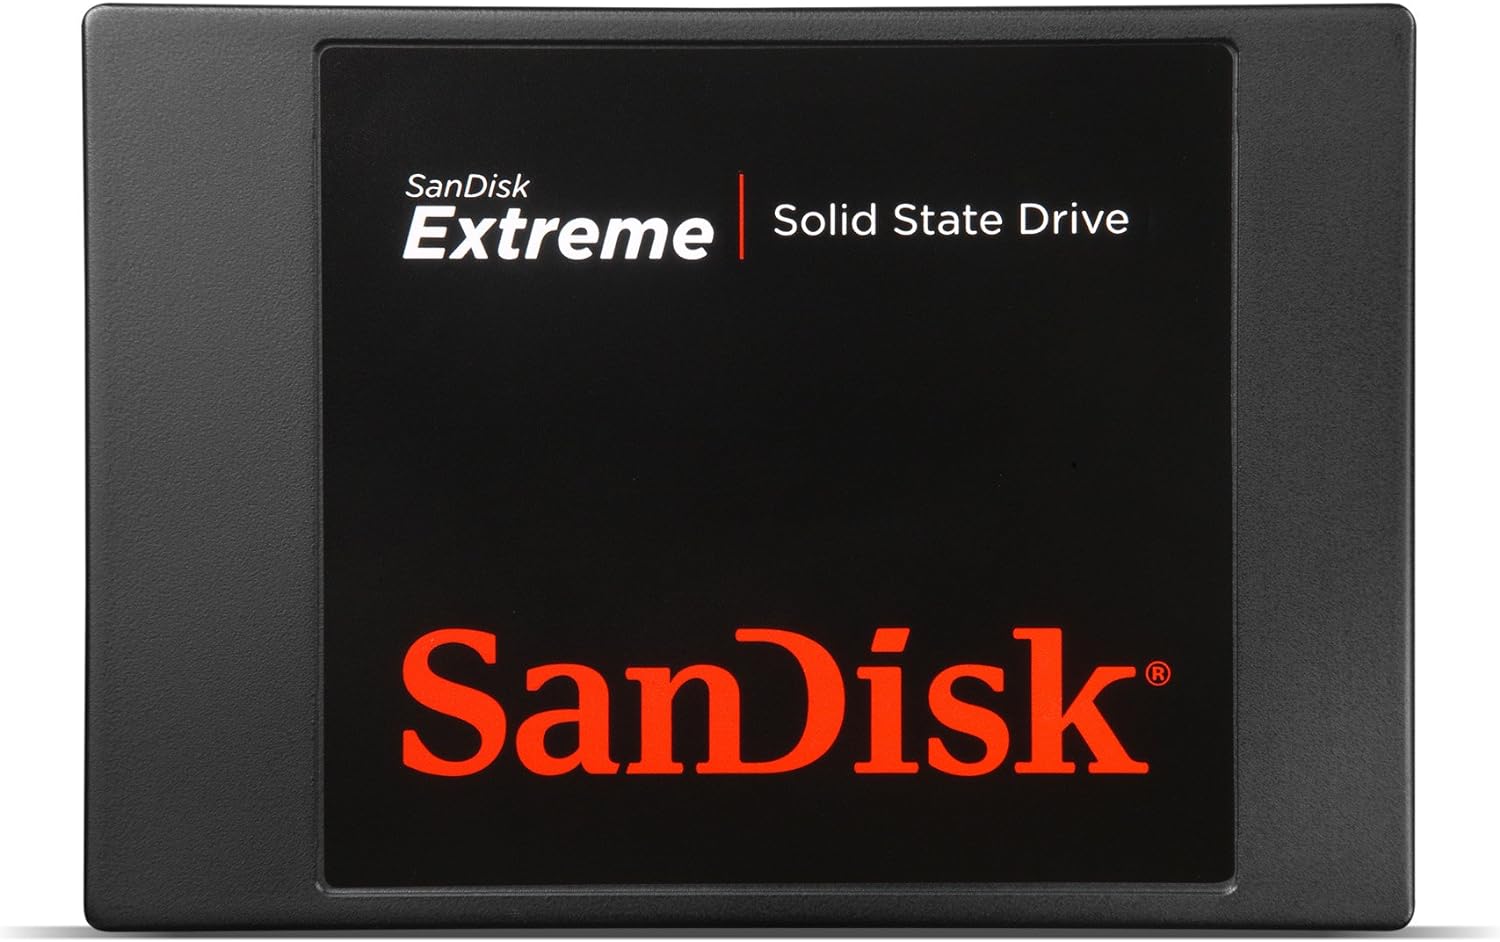 SanDisk Extreme SSD 240 GB SATA 6.0 Gb-s 2.5-Inch Solid State Drive SDSSDX-240G-G25